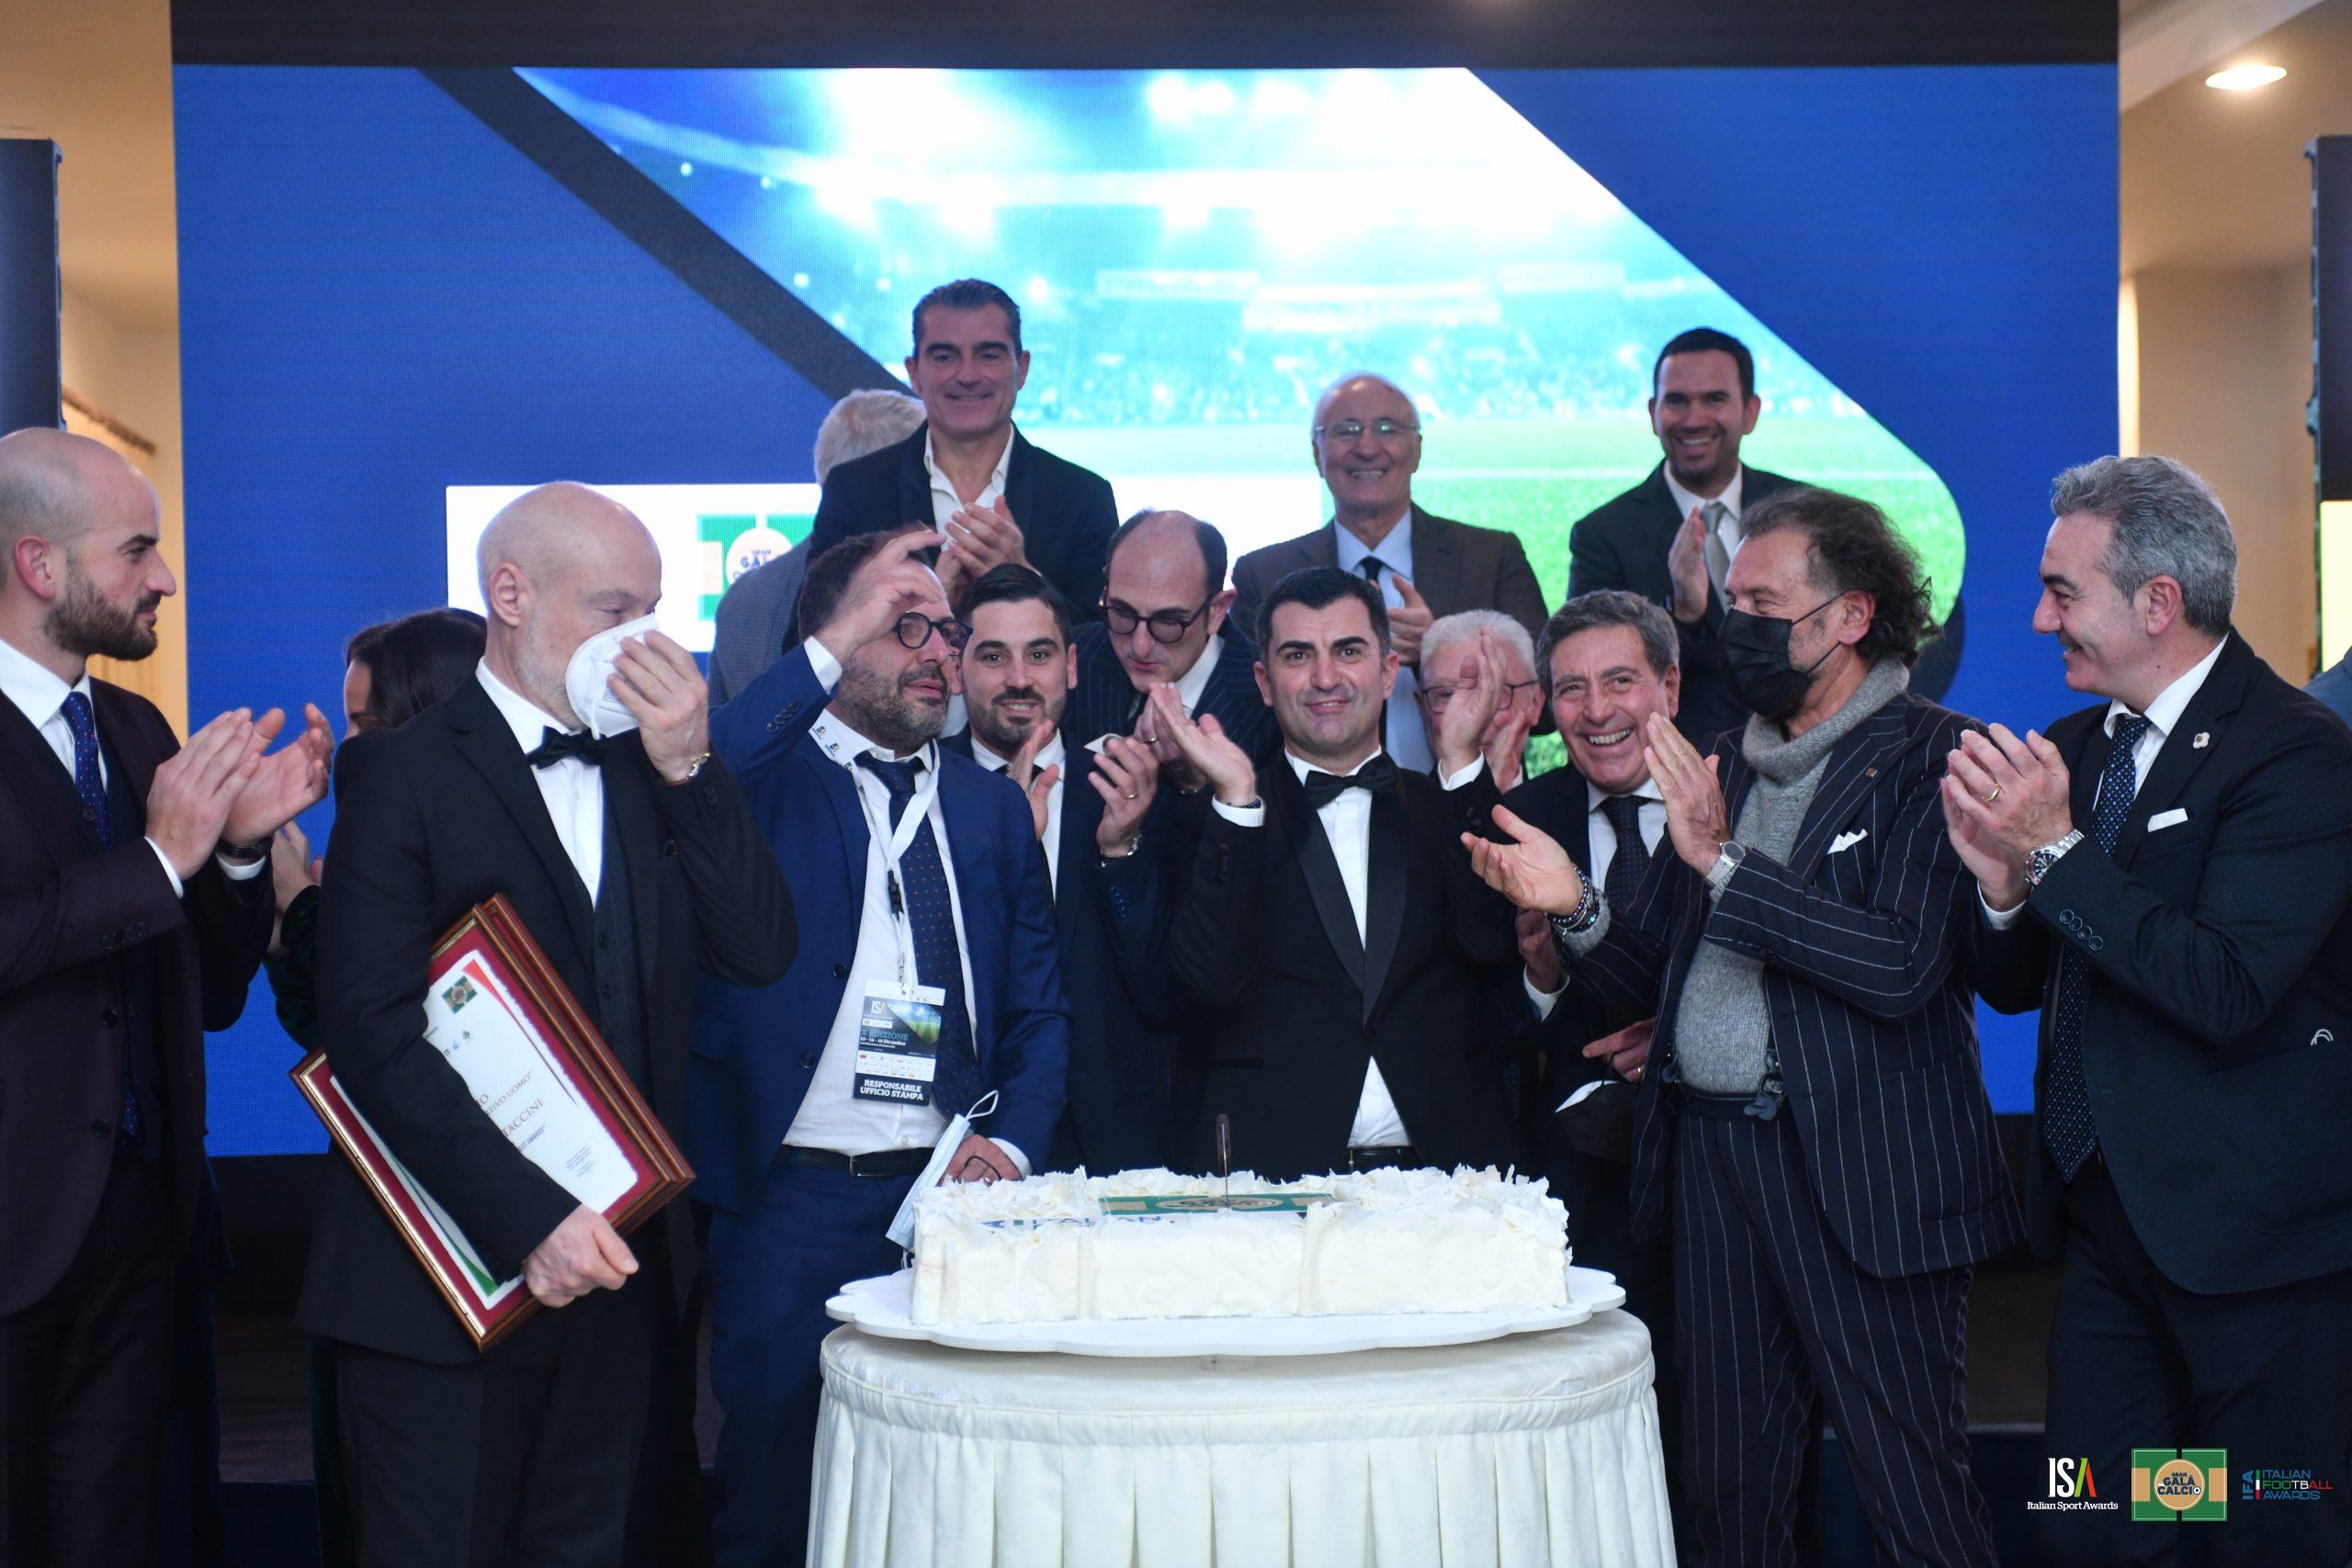 2021-Italian-Sport-Awards-Gran-Galà-Del-Calcio-Italian-Football-Awards-6-scaled